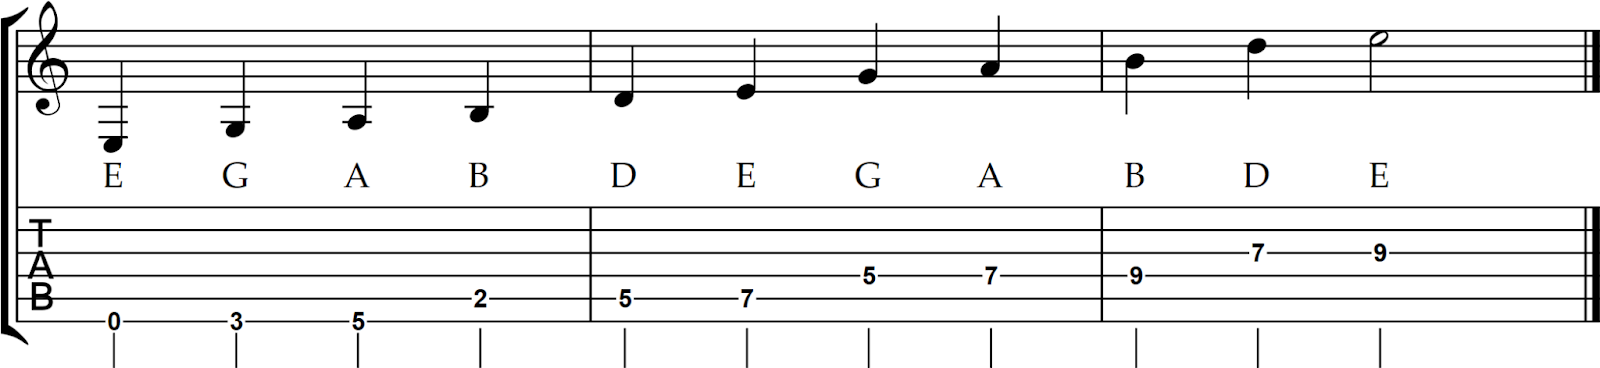 3 note per string pentatonic practice beginning on E string.